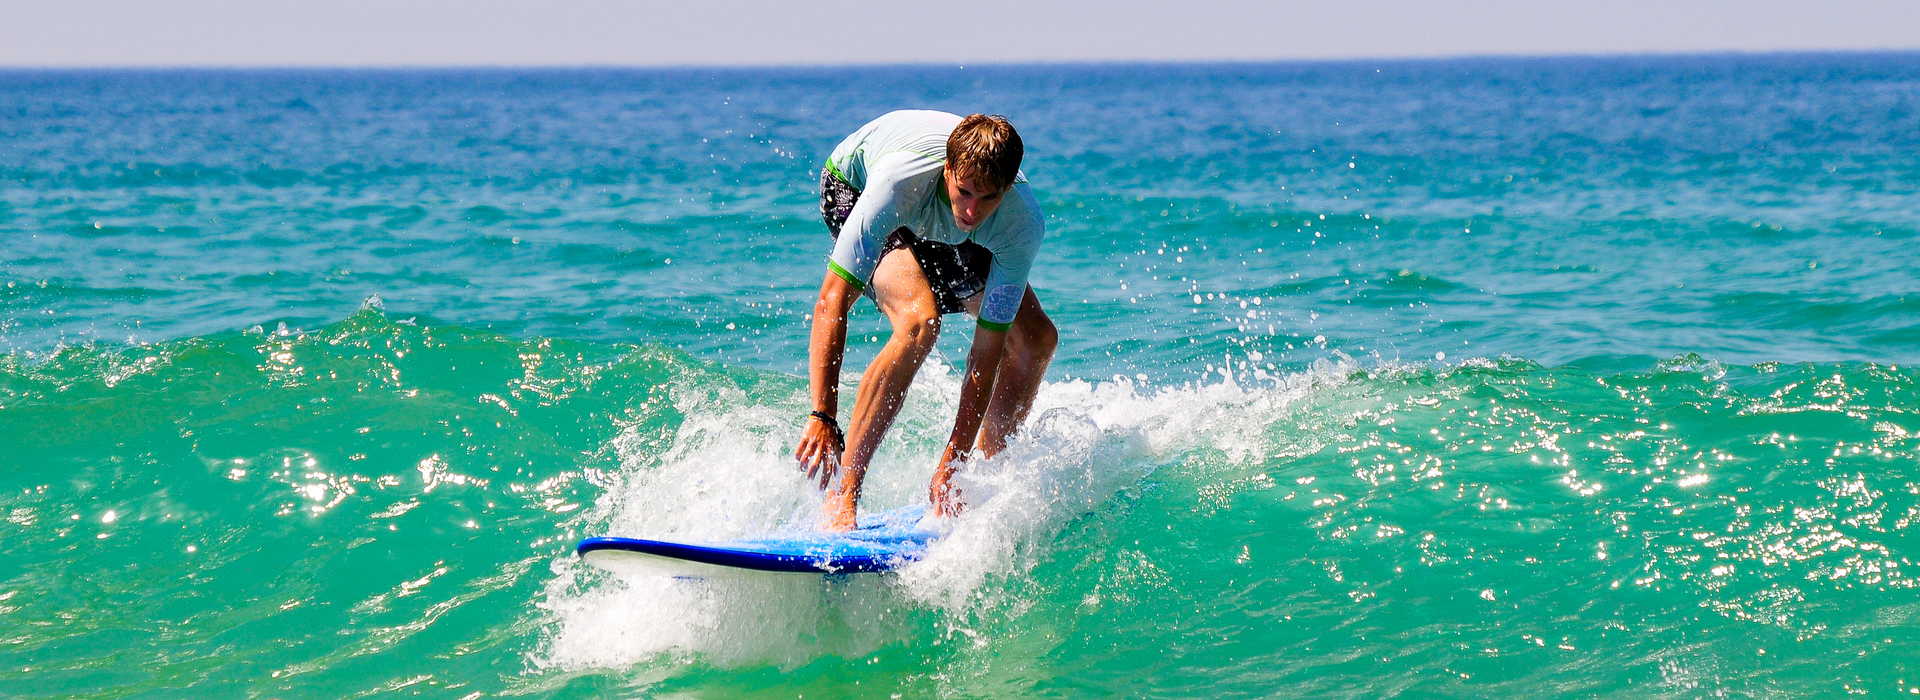 Junior surf lessons in Spain